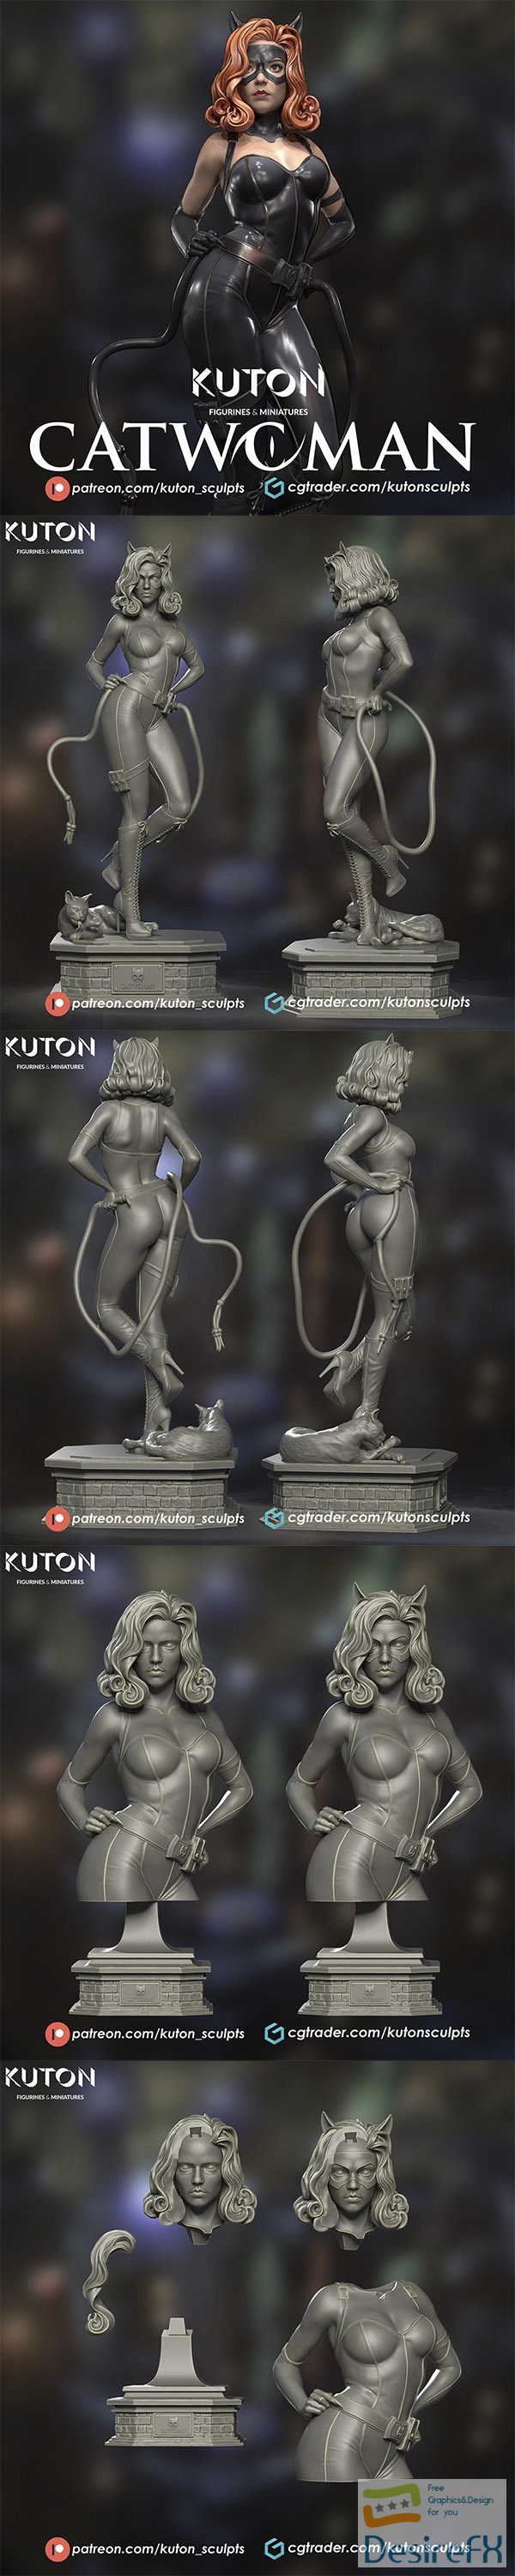 Kuton Figurines – Catwoman – 3D Print